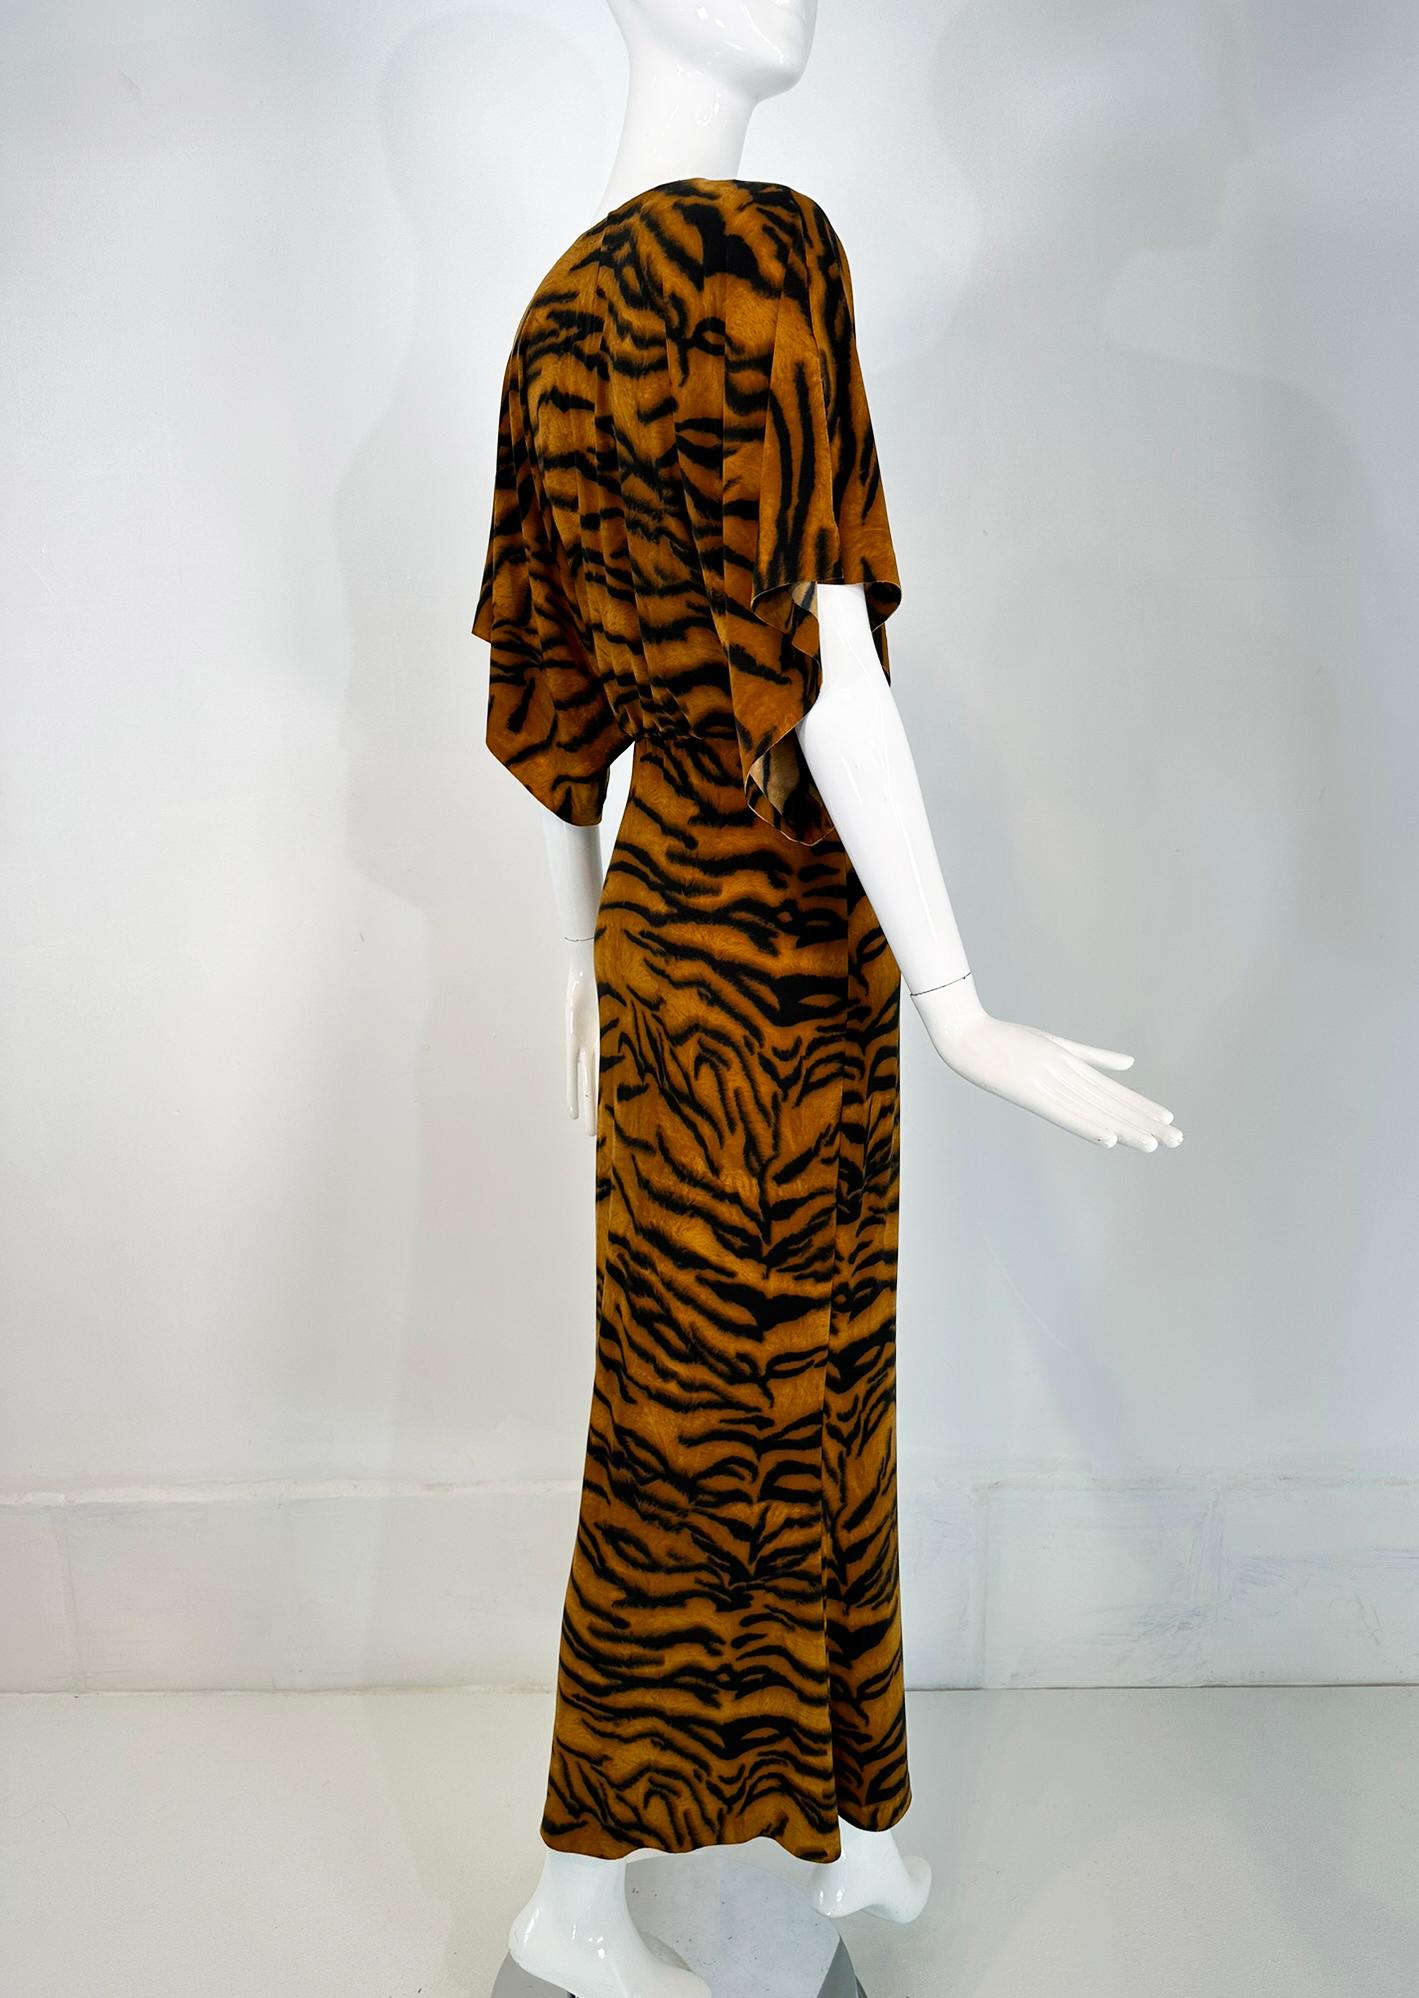 Norma Kamali Tiger Stripe Stretch Jersey Maxi Dress 34 For Sale 4